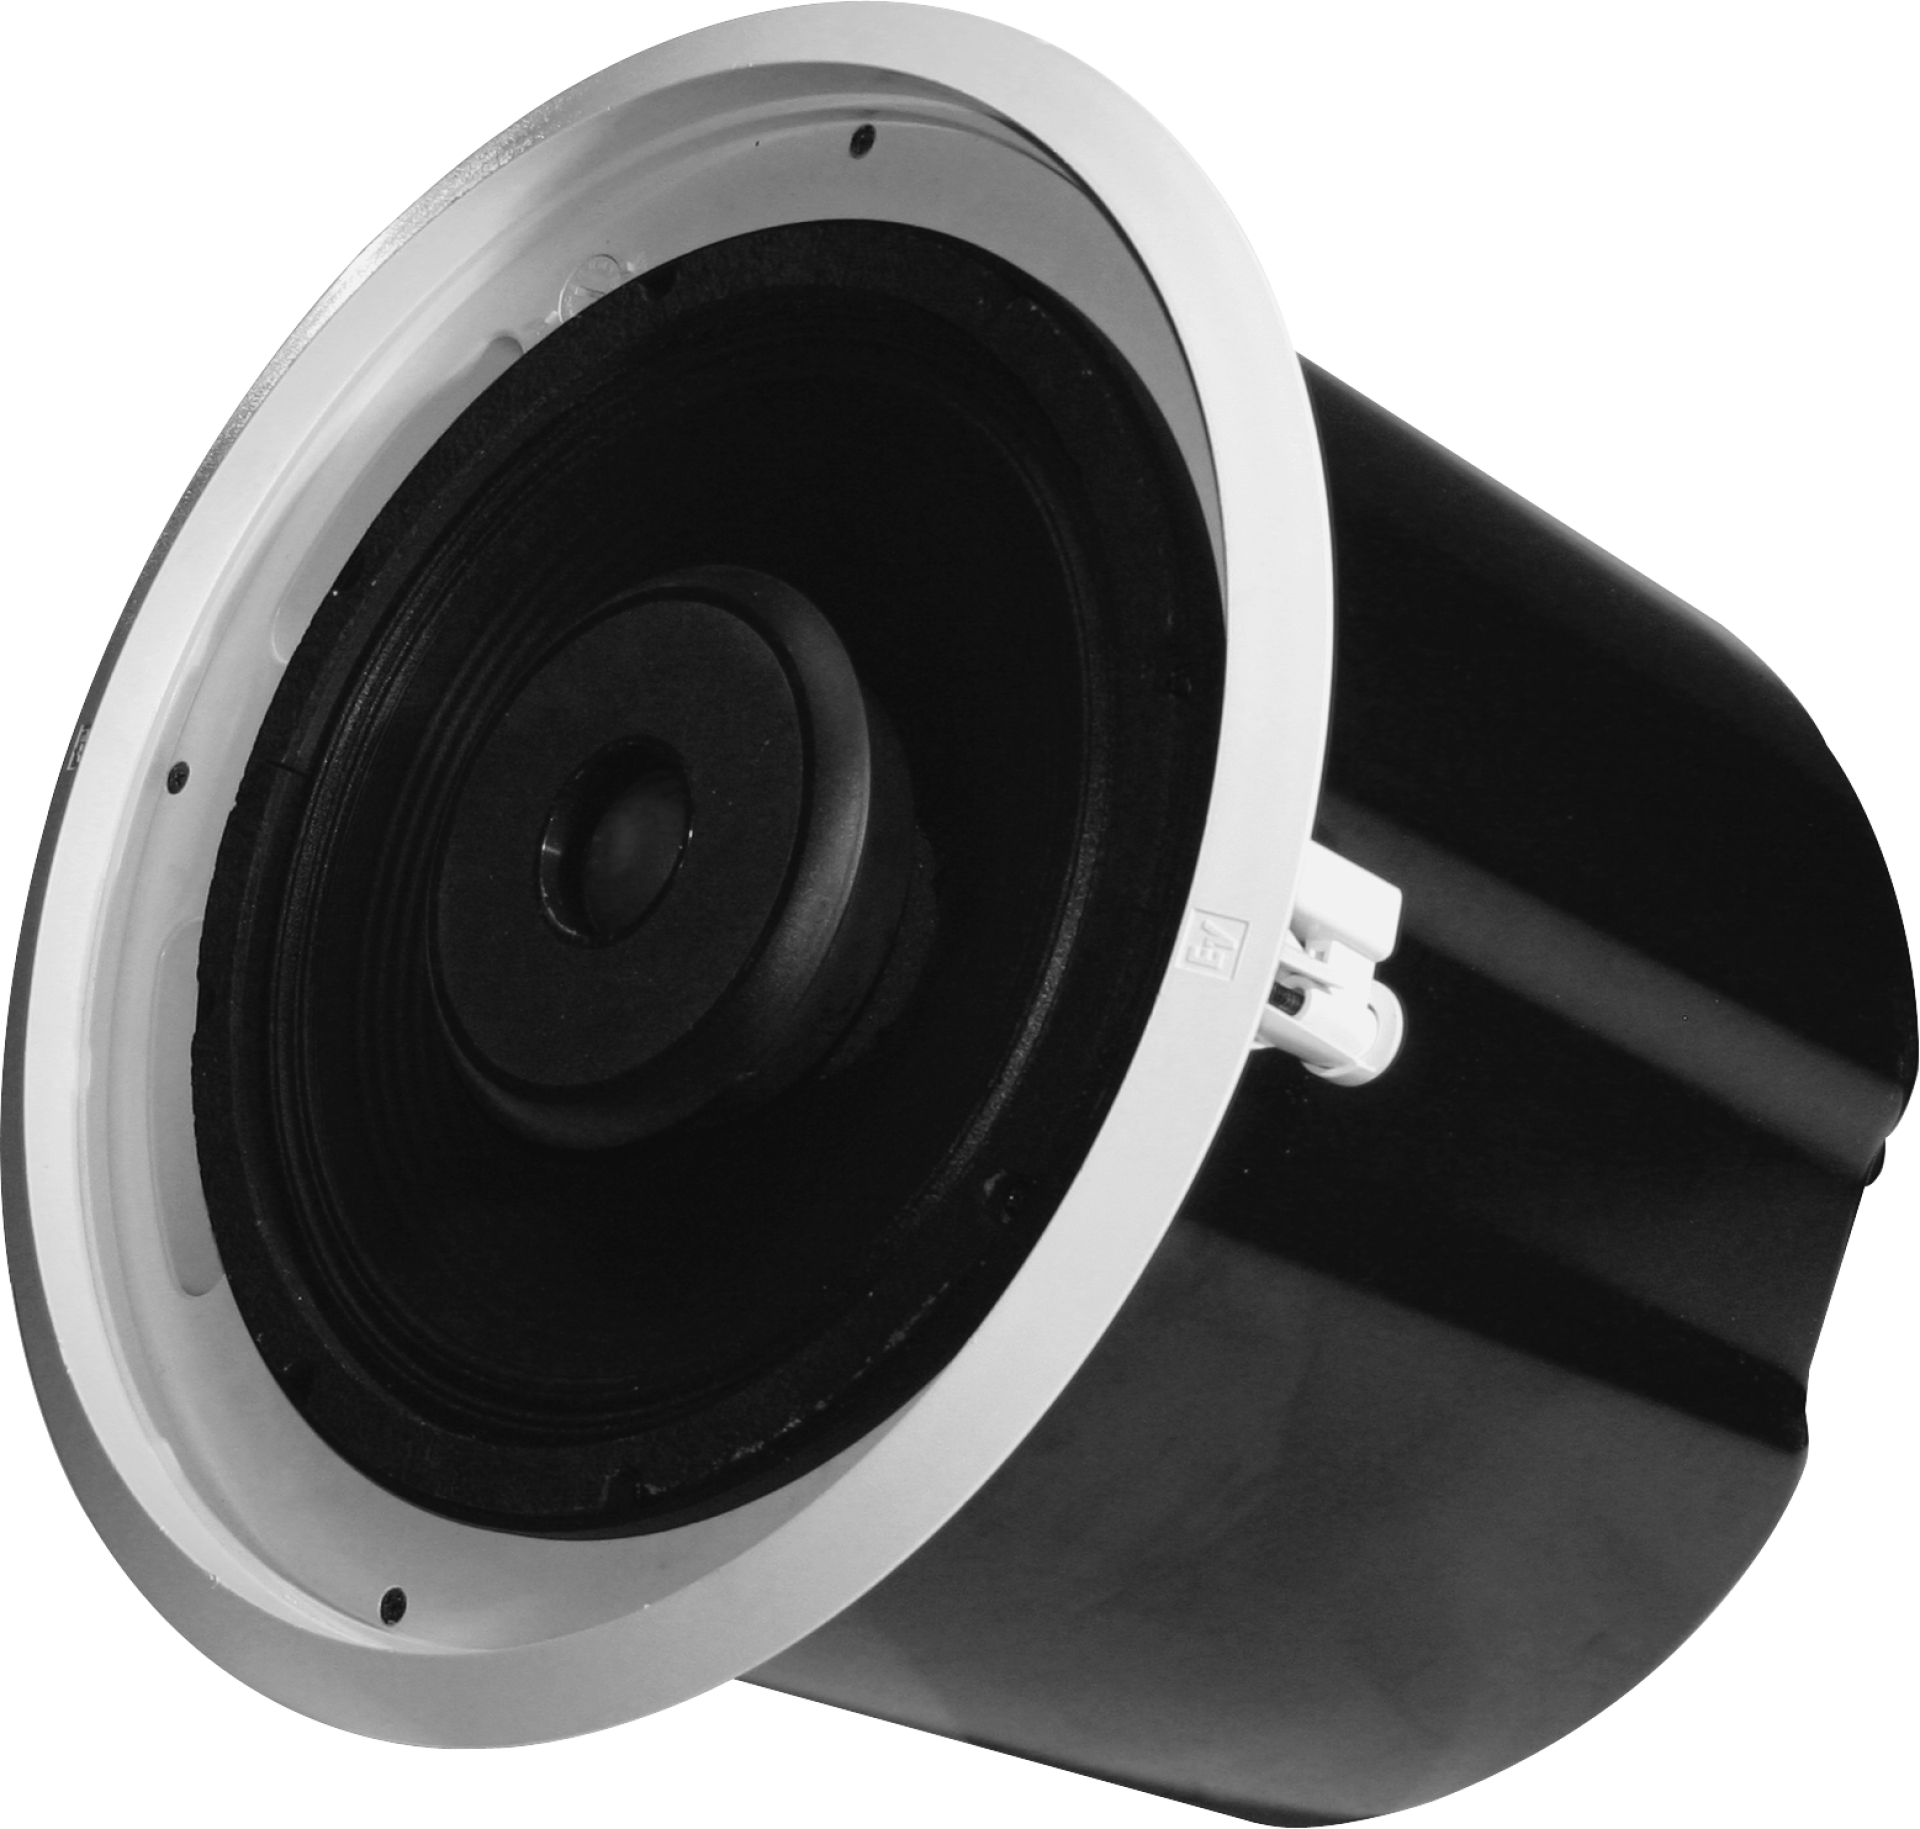 EVID ceiling mount speakers